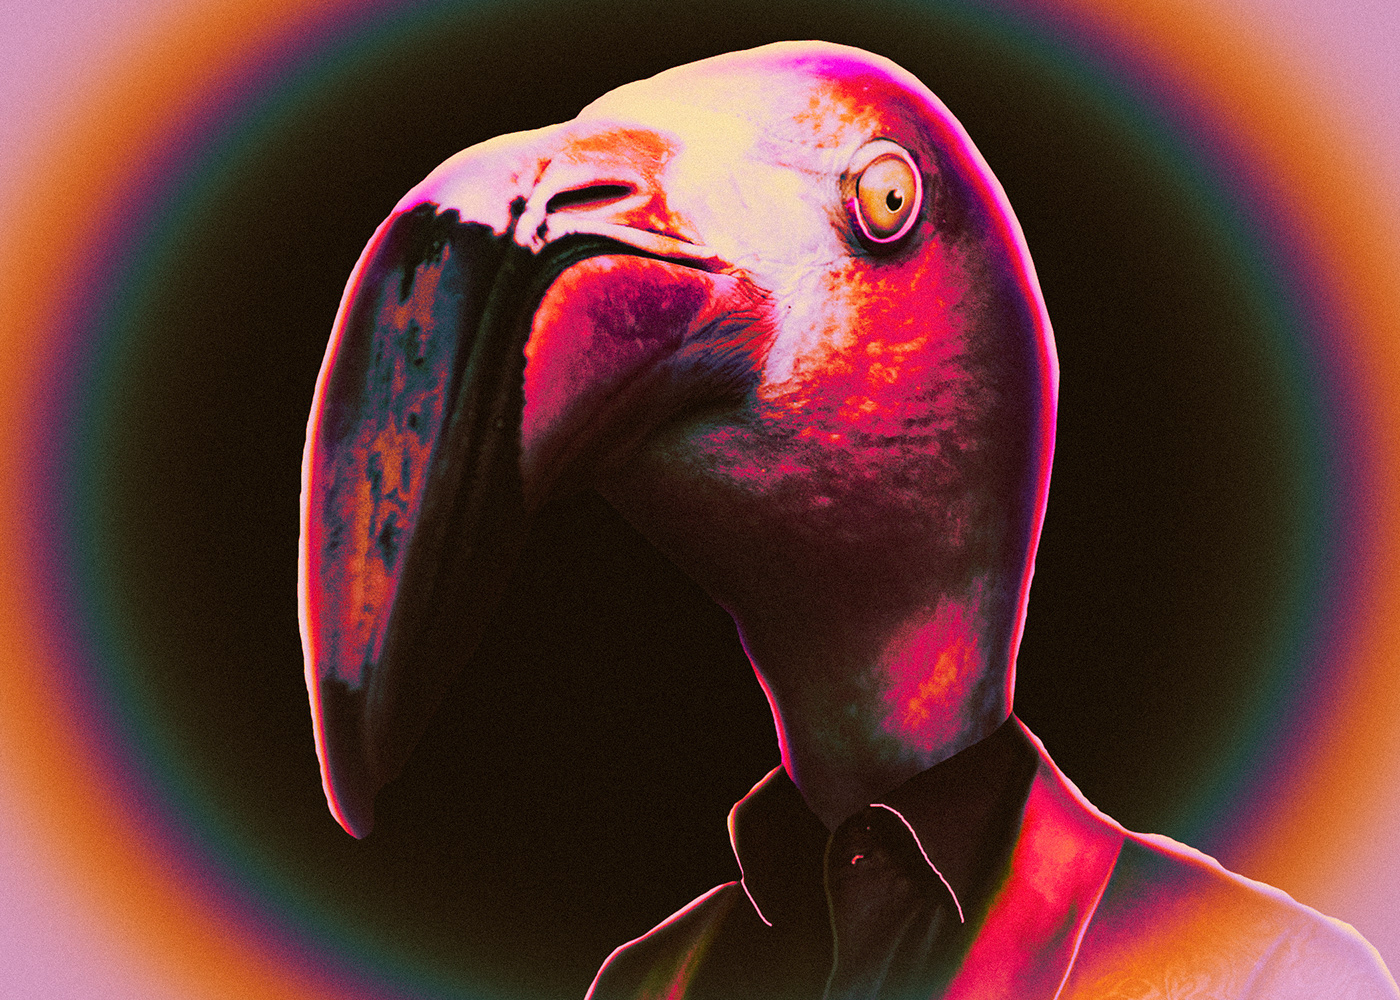 hybrid bird Nature photoshop Photo Manipulation  Fun james bond spy Character flamingo